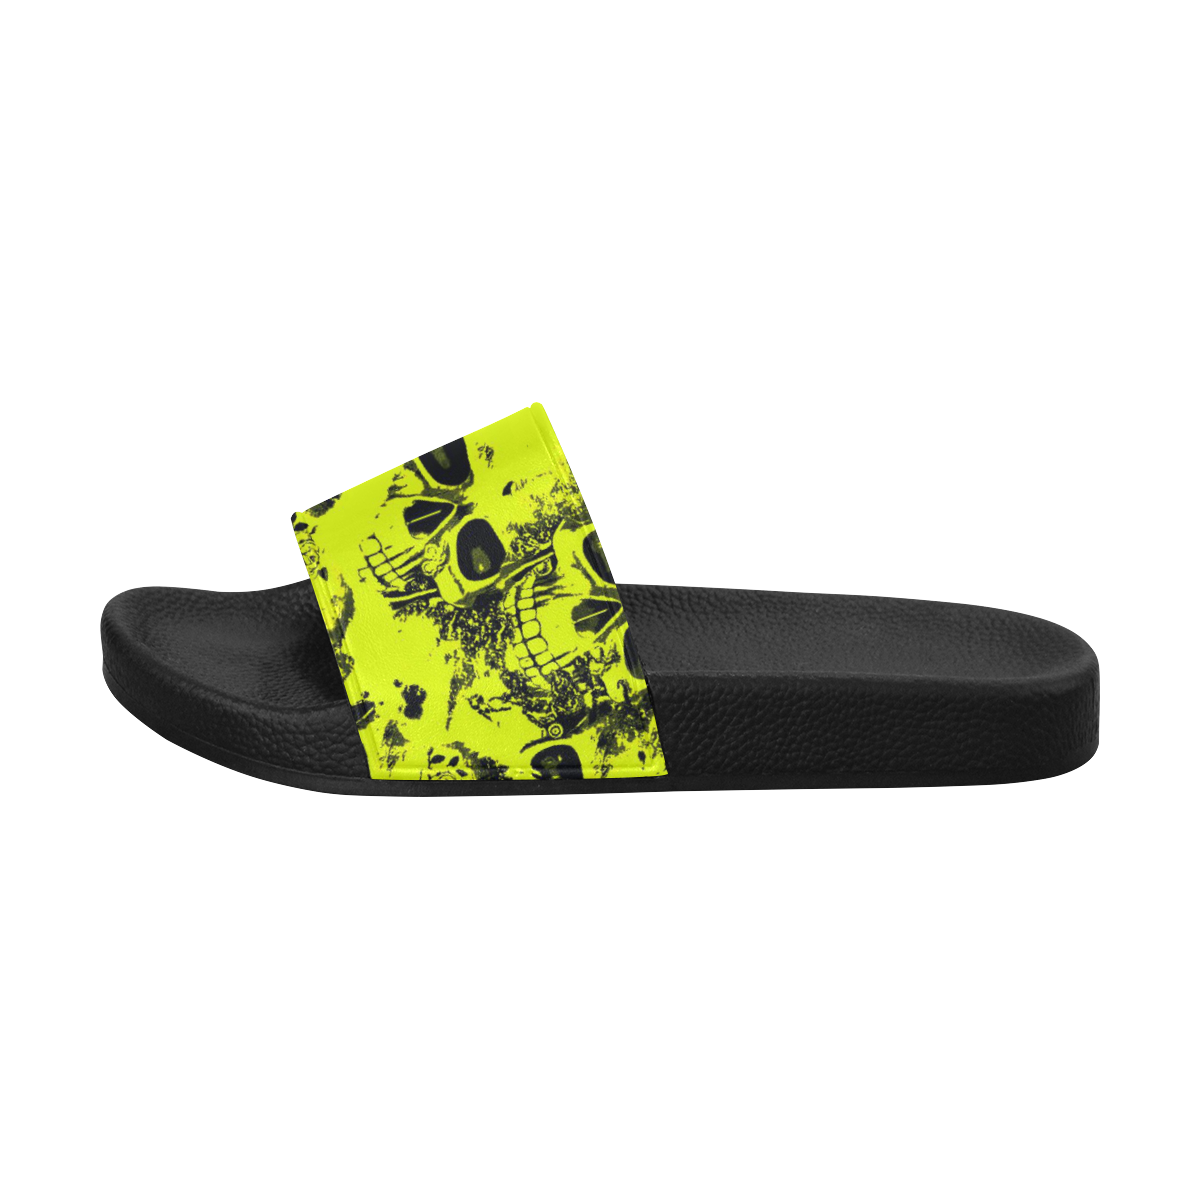 cloudy Skulls black yellow by JamColors Men's Slide Sandals (Model 057)